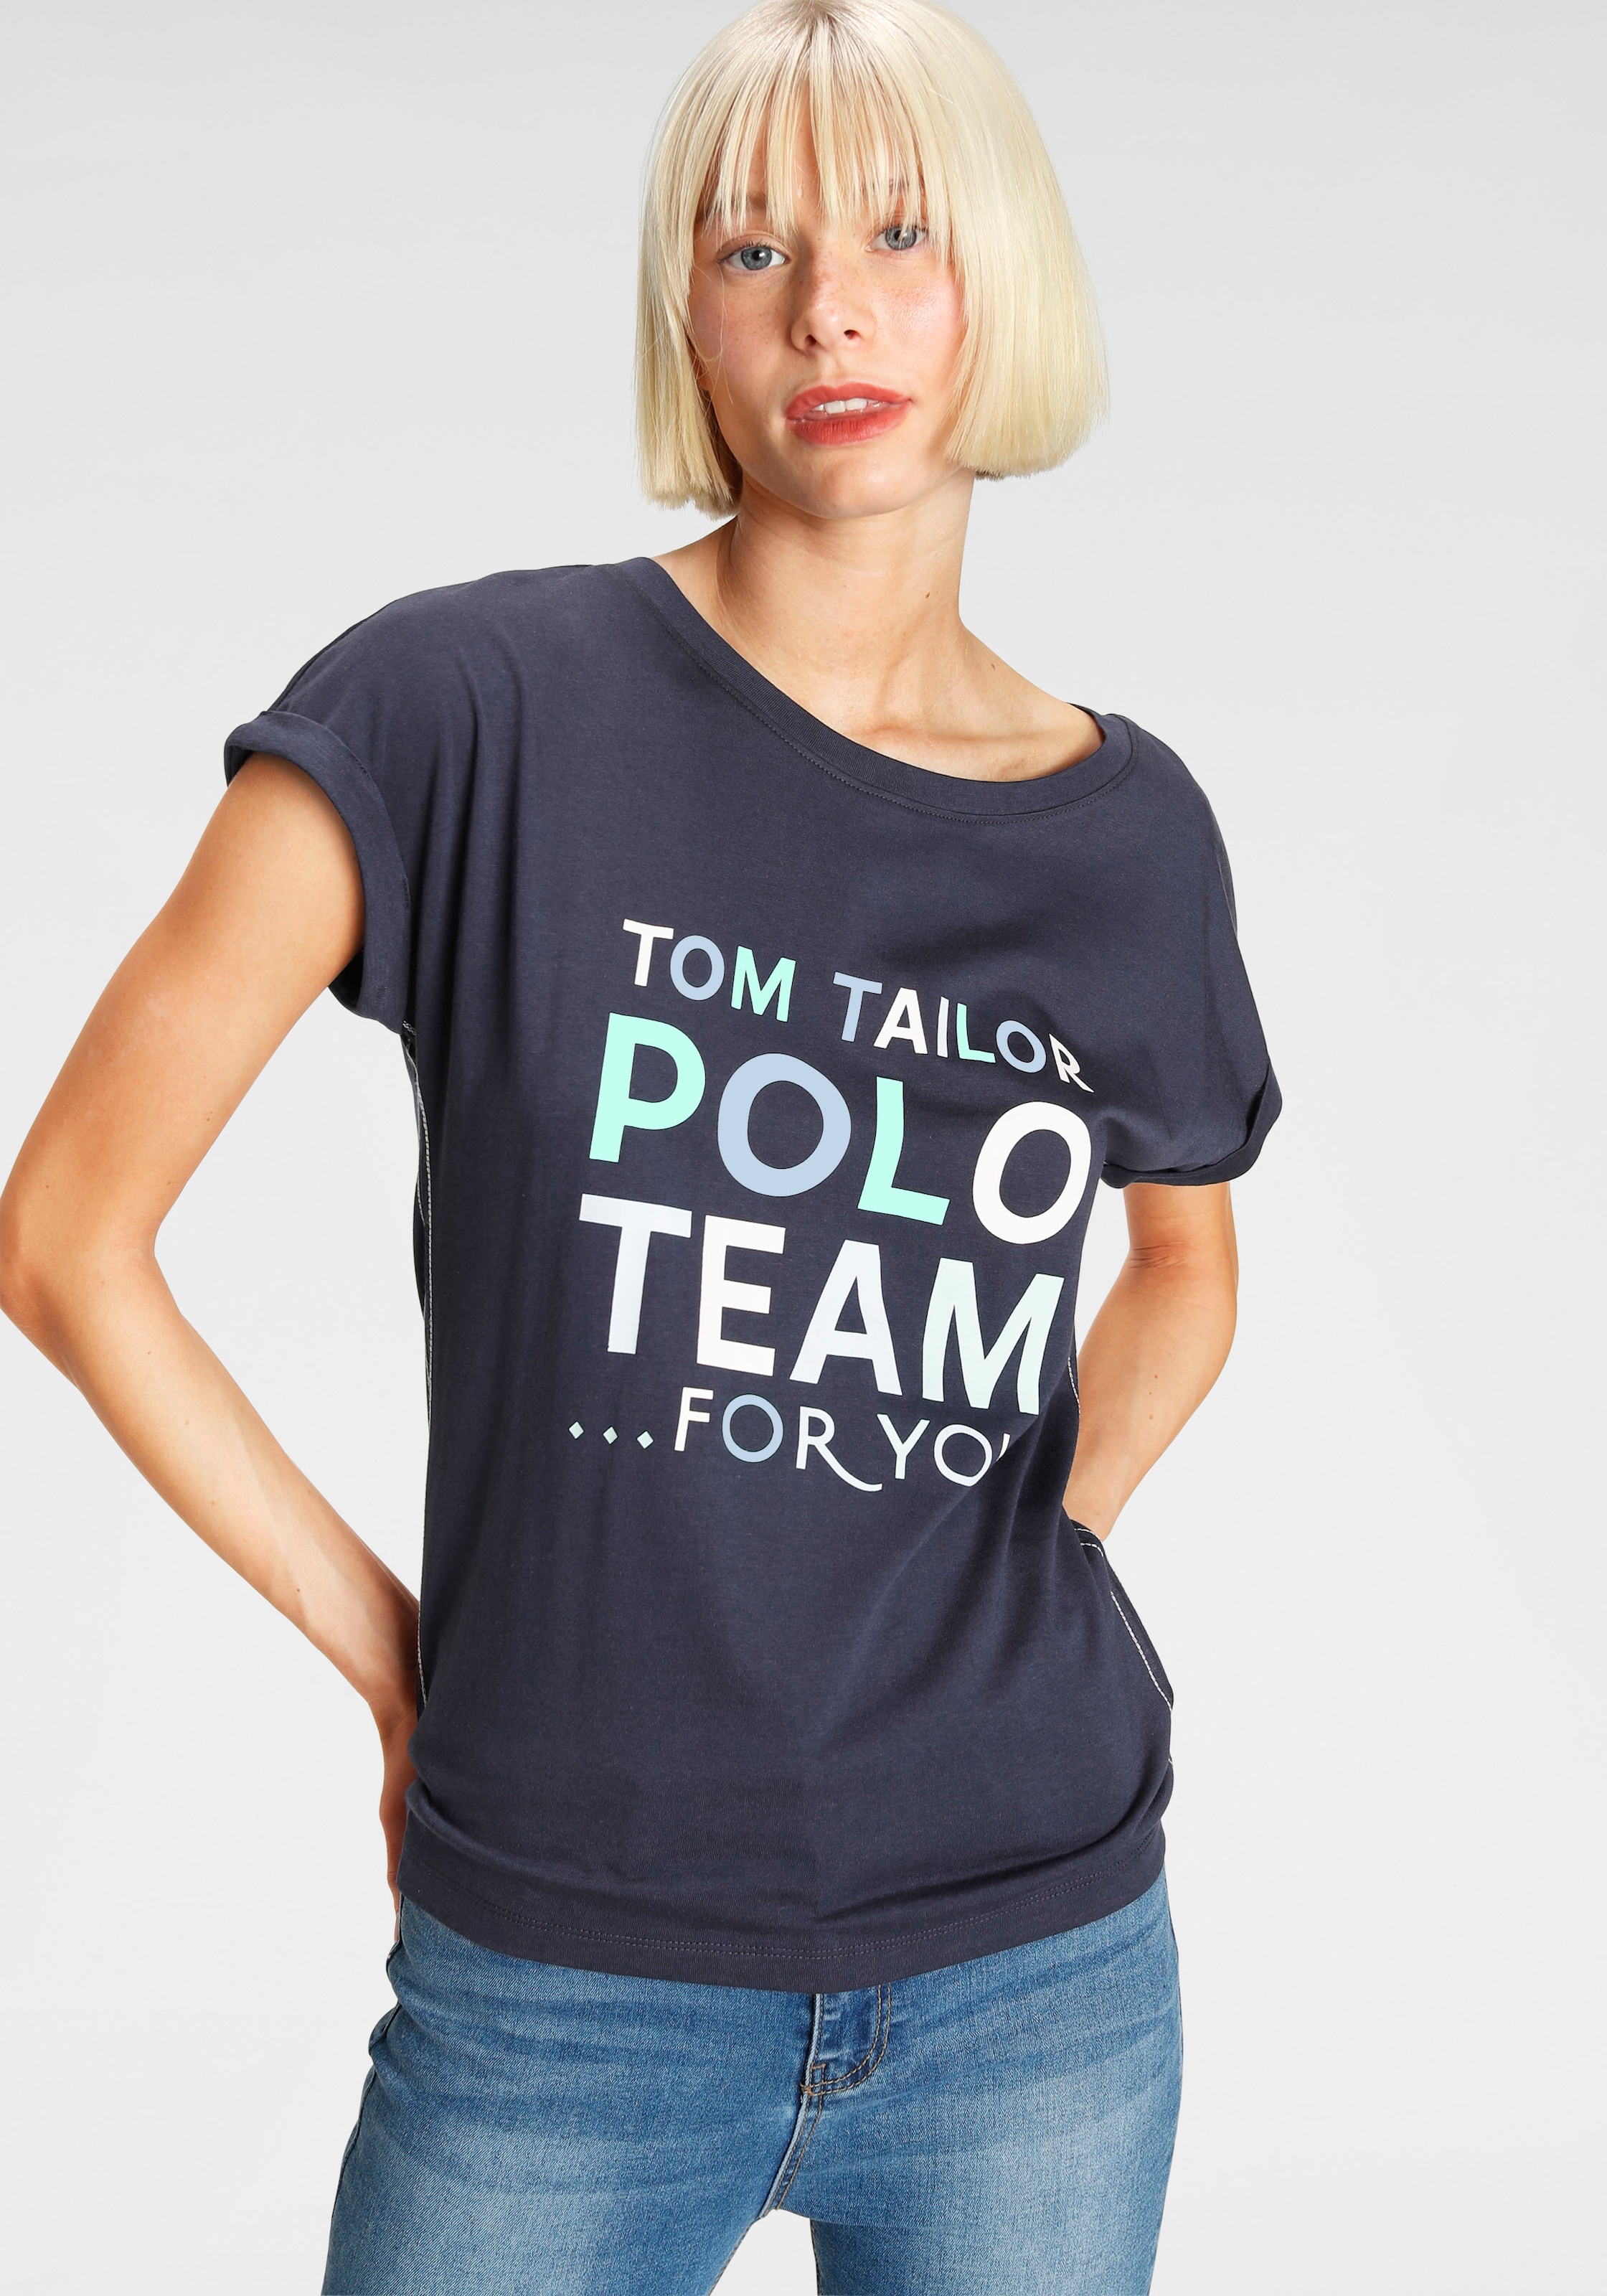 Polo Team online kaufen Tailor Tom ▻